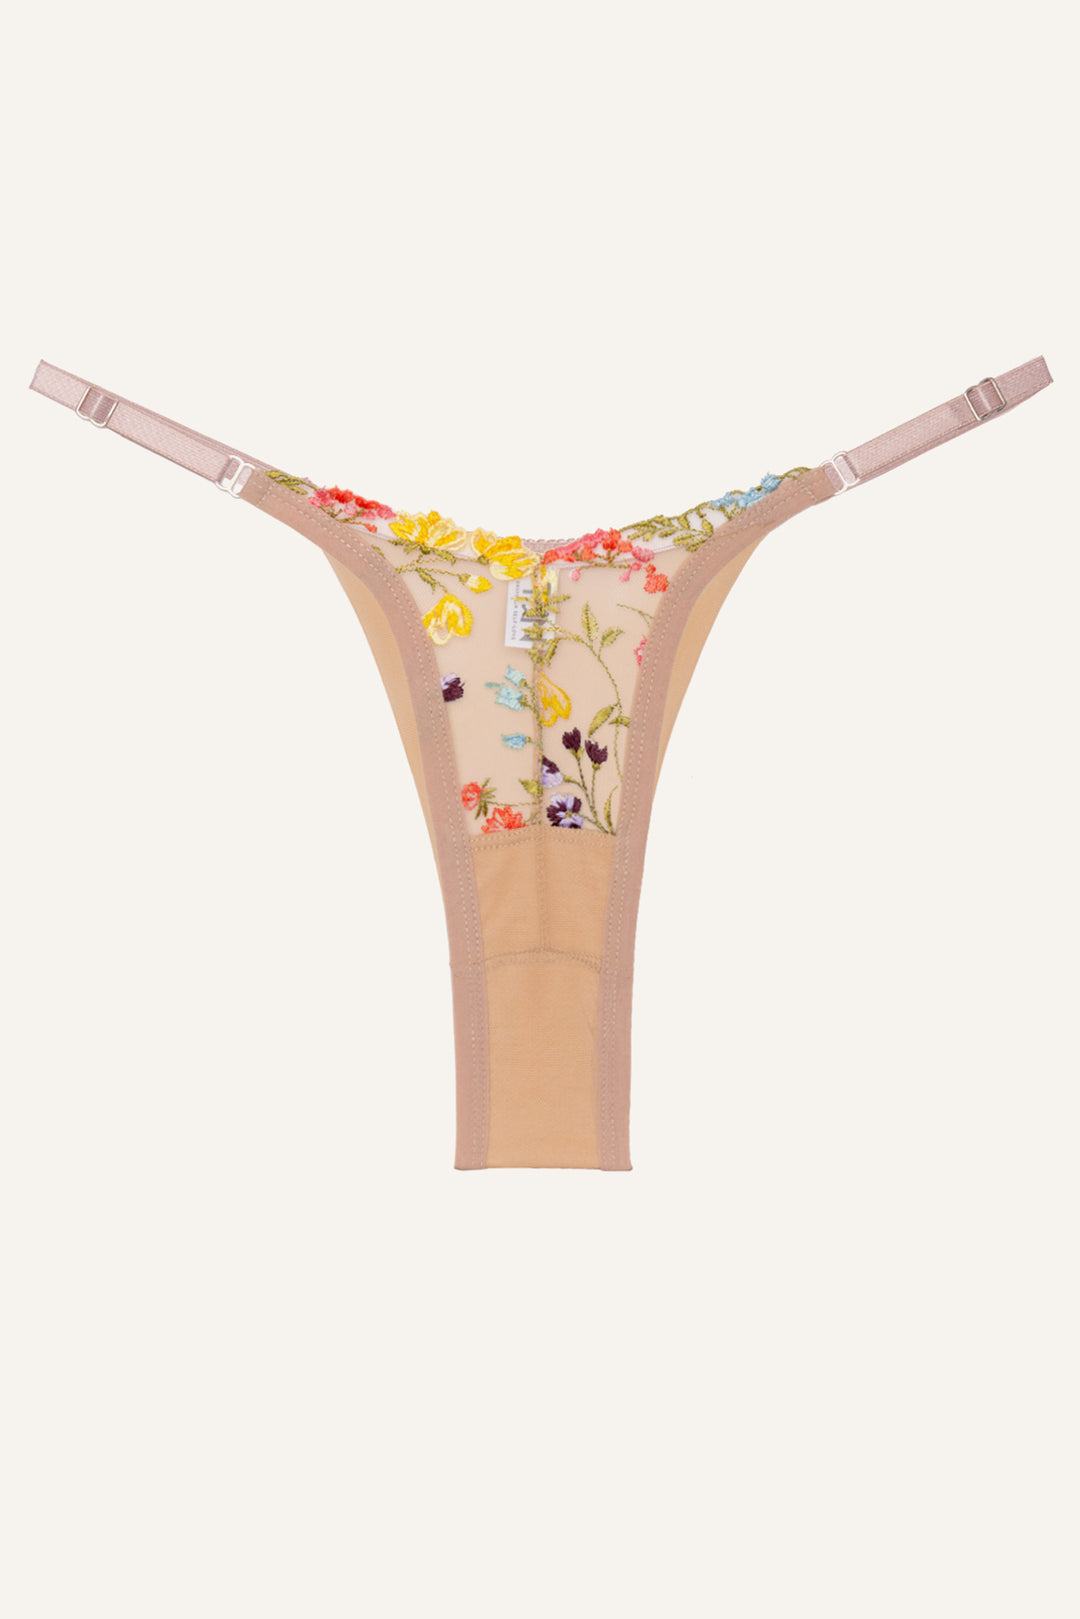 Toru & Naoko lingerie - Surprise panties